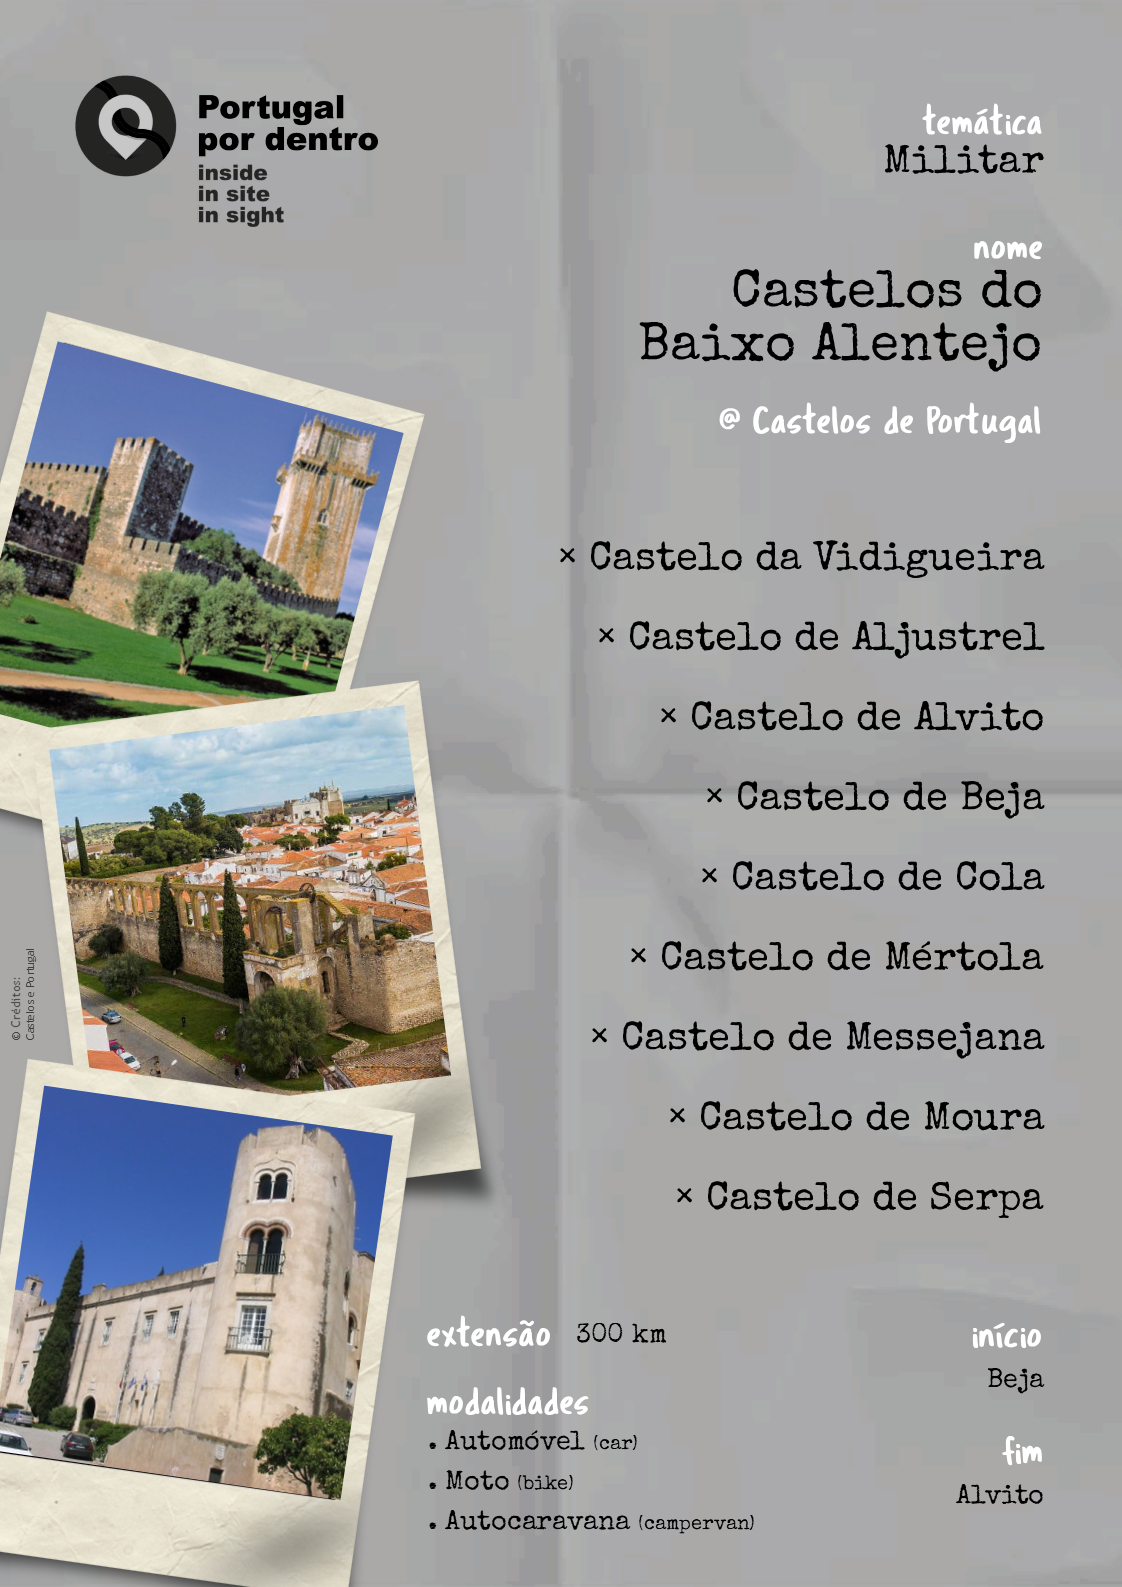 Castelos do Baixo Alentejo